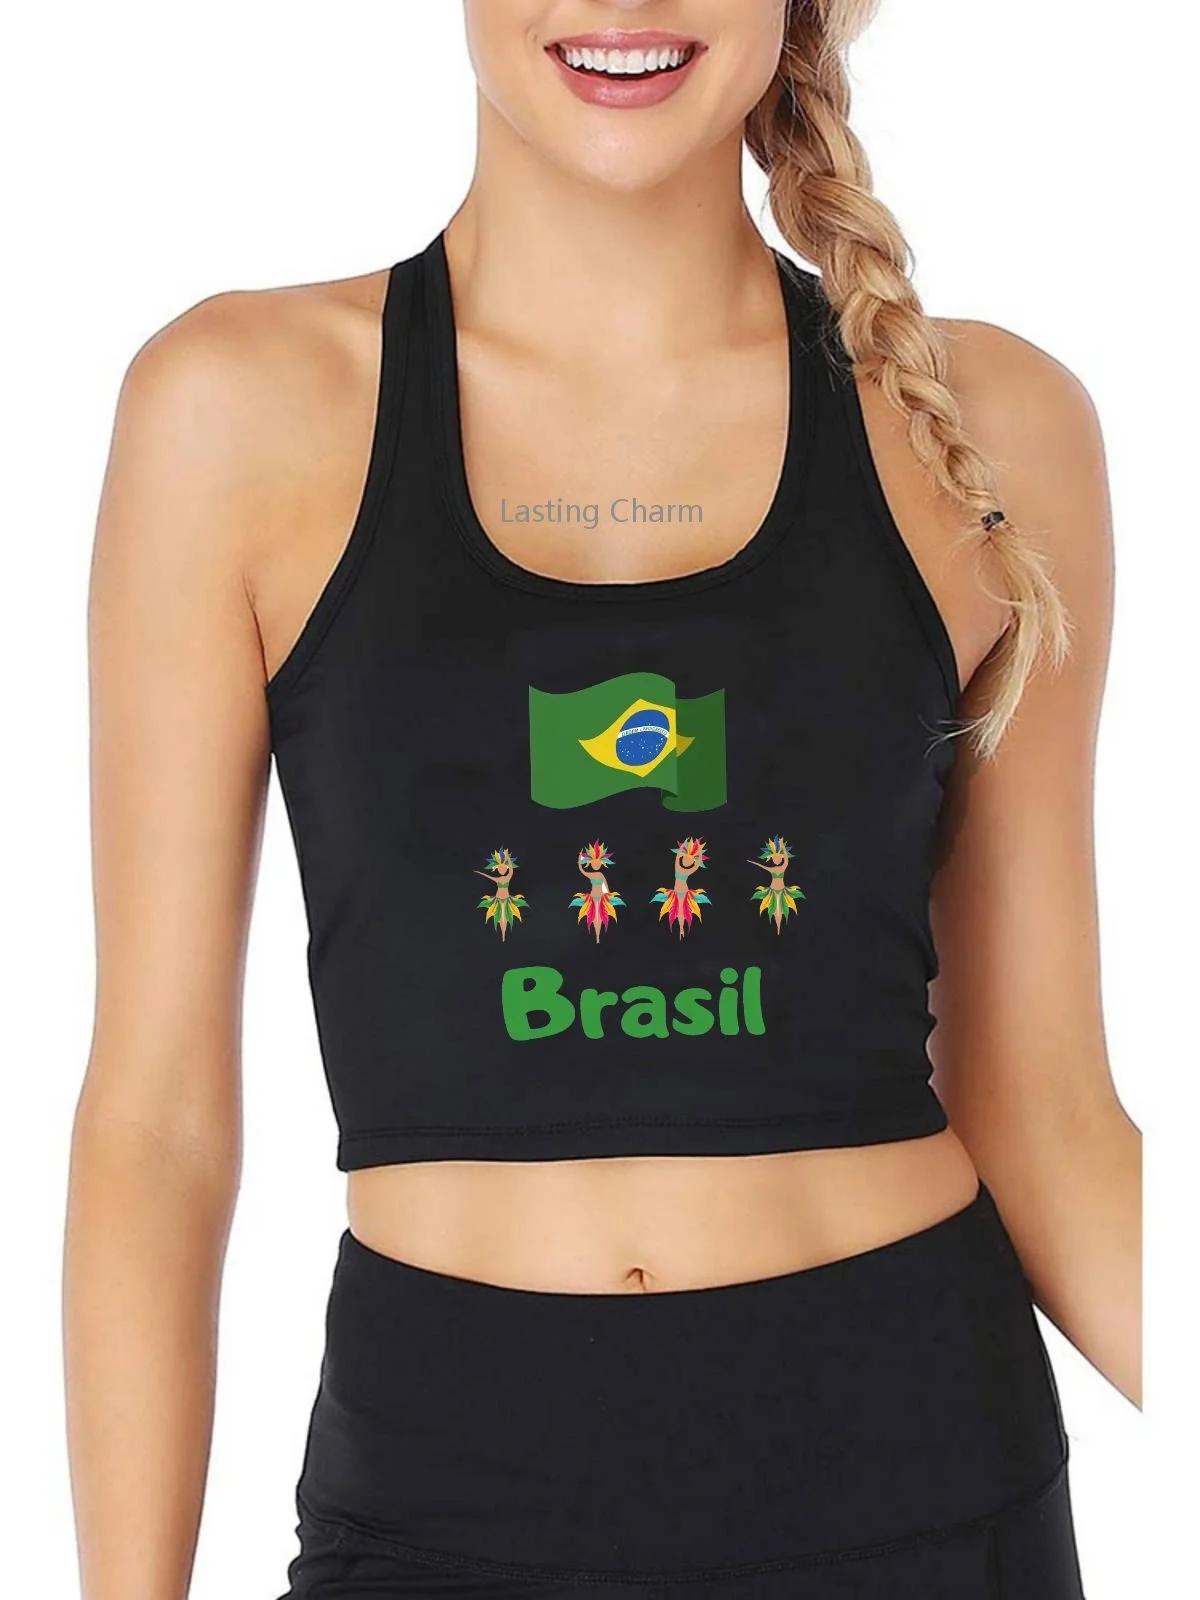 Brasil Carnaval Dancers Design Breathable Slim Fit Tank Top Womens Personalized Customization Yoga Sports Training C